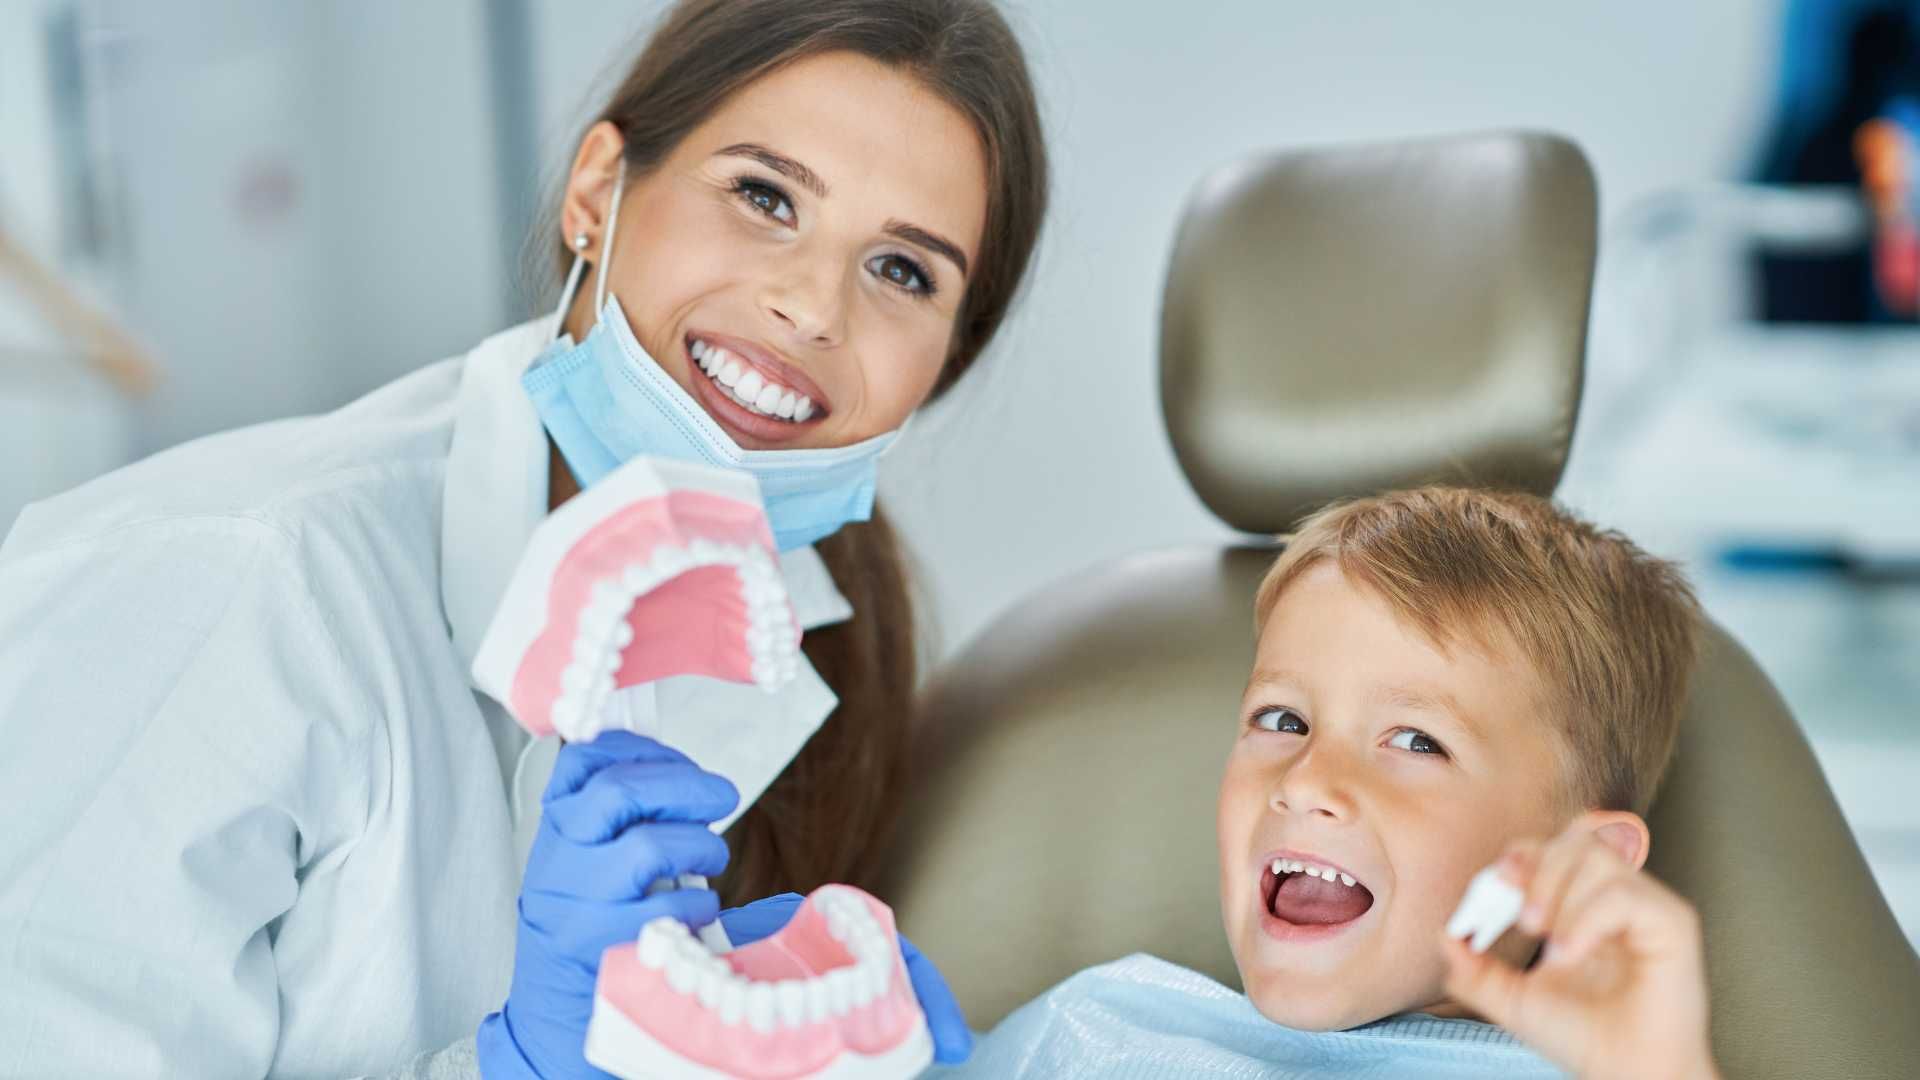 پالپوتومی دندان شیری (هر دندان)